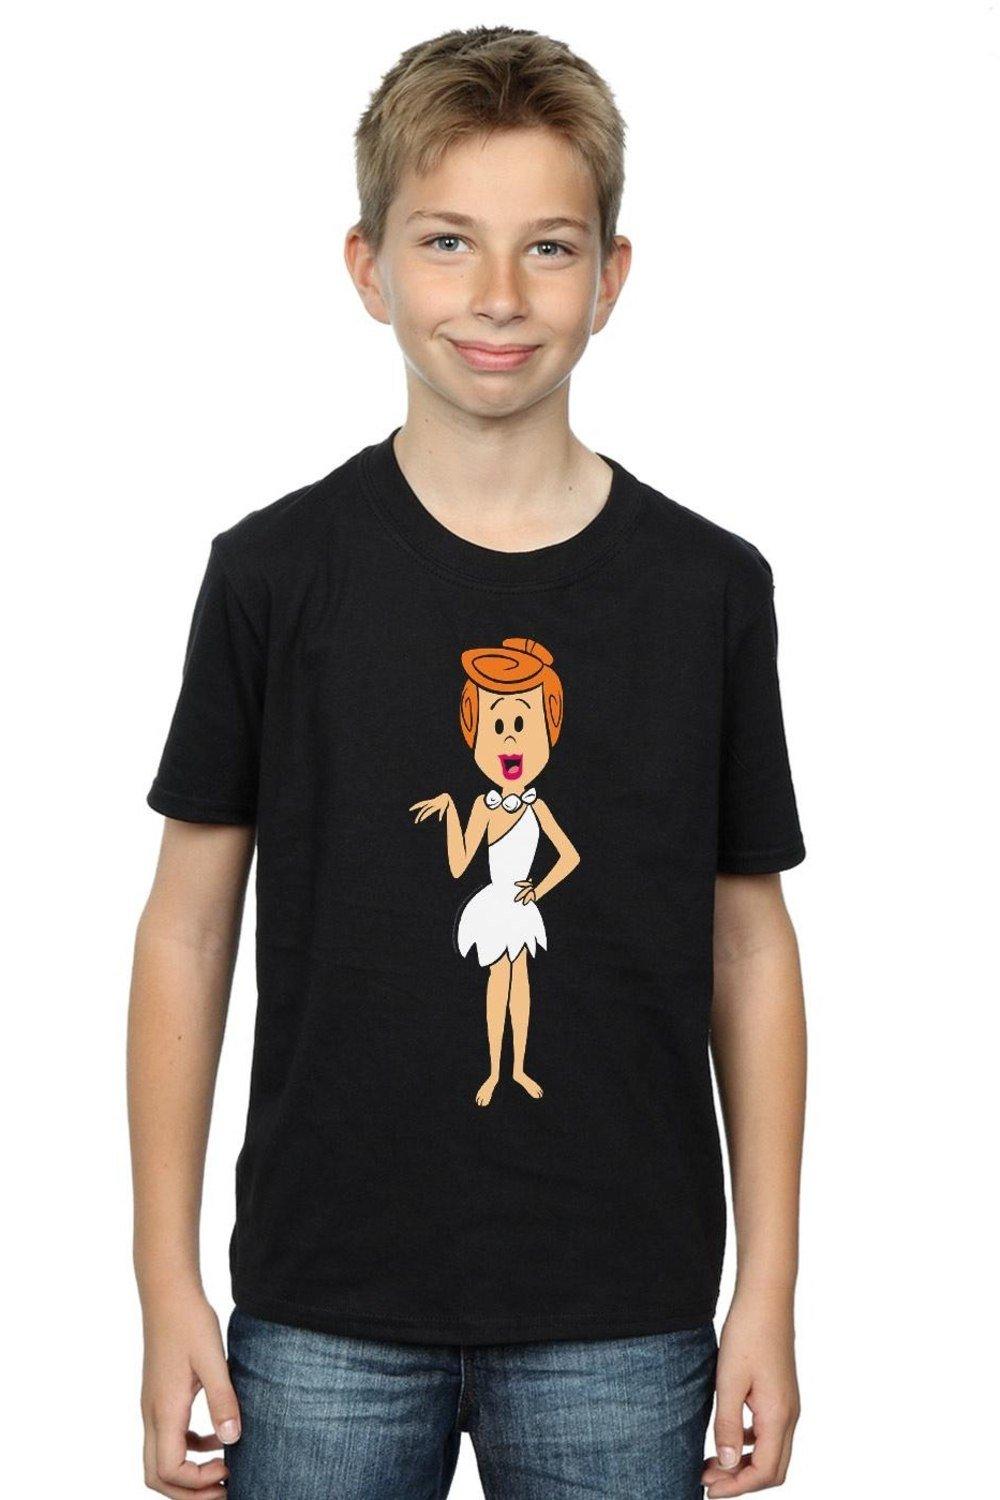 Wilma Flintstone Classic Pose T-Shirt